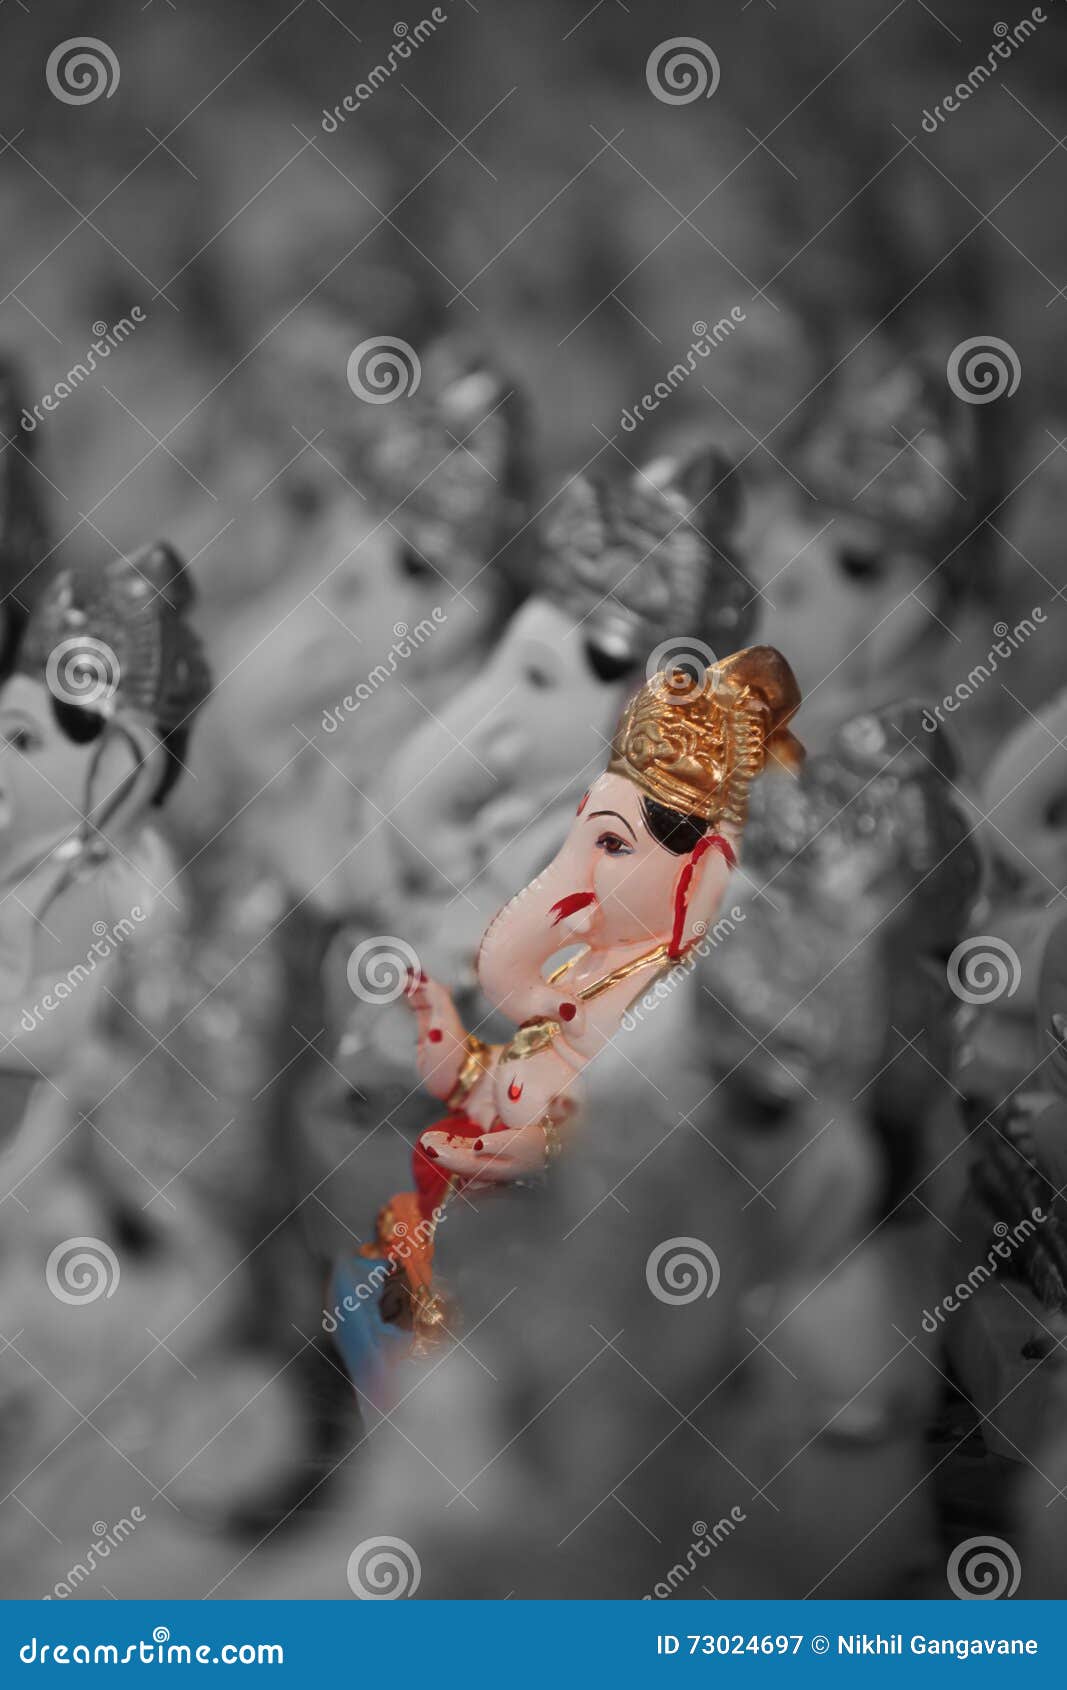 Unique Ganesha Idol stock image. Image of ganapati, seller - 73024697